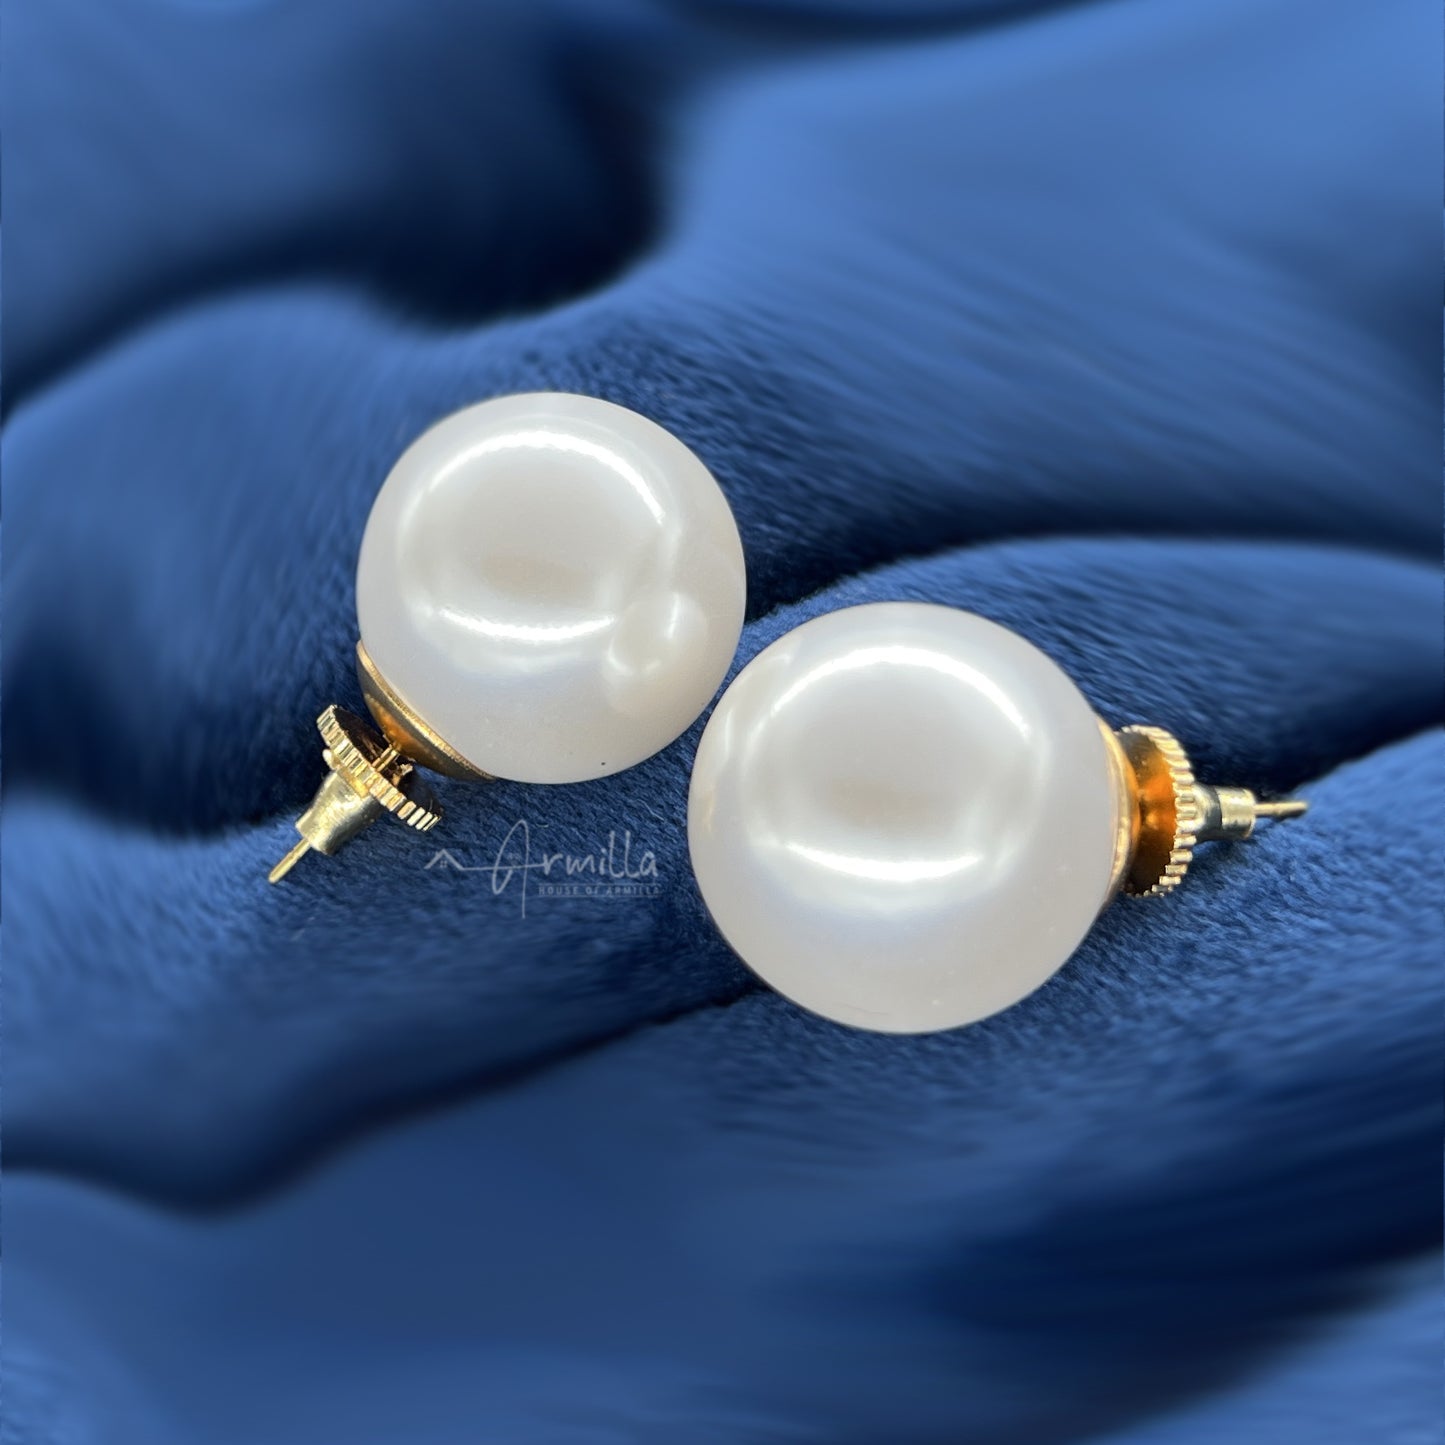 White Pearl Stud Earrings 20 mm sized pearls